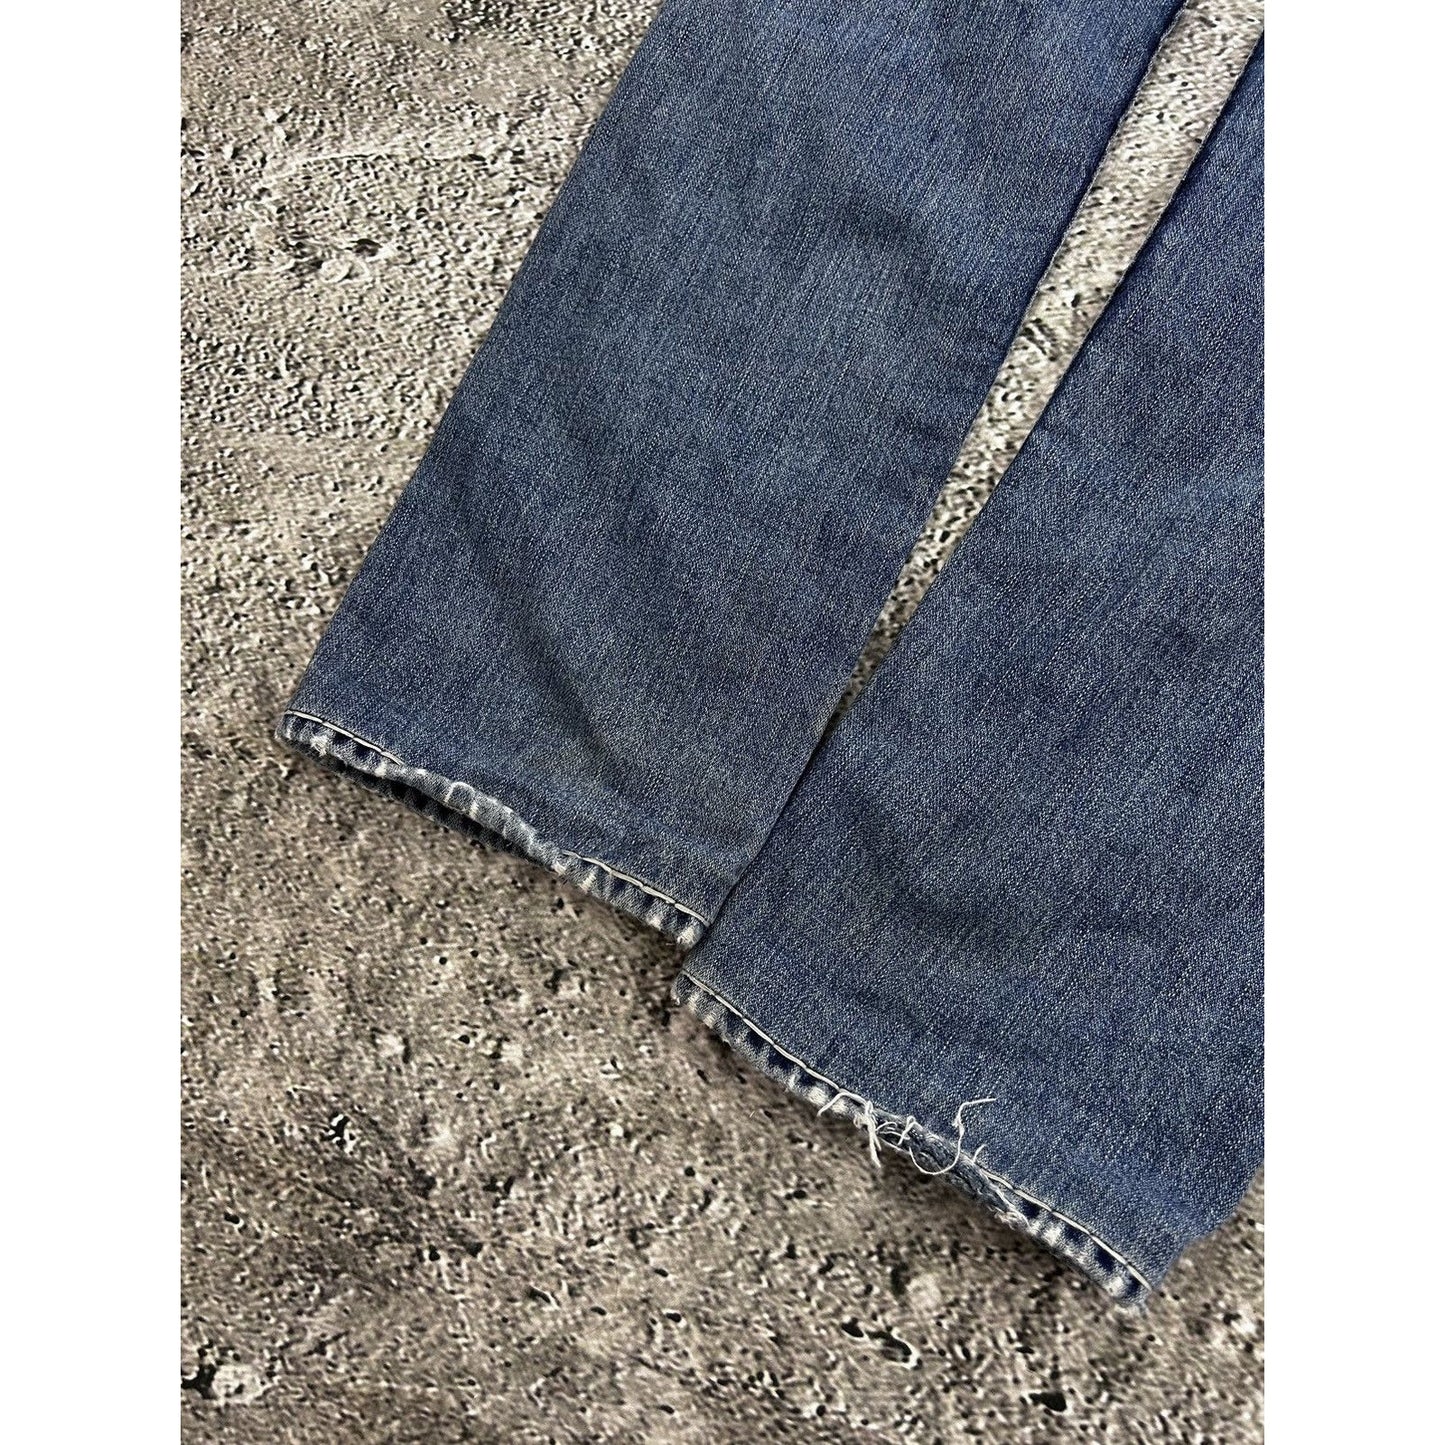 True Religion blue jeans thick white stitching Y2K